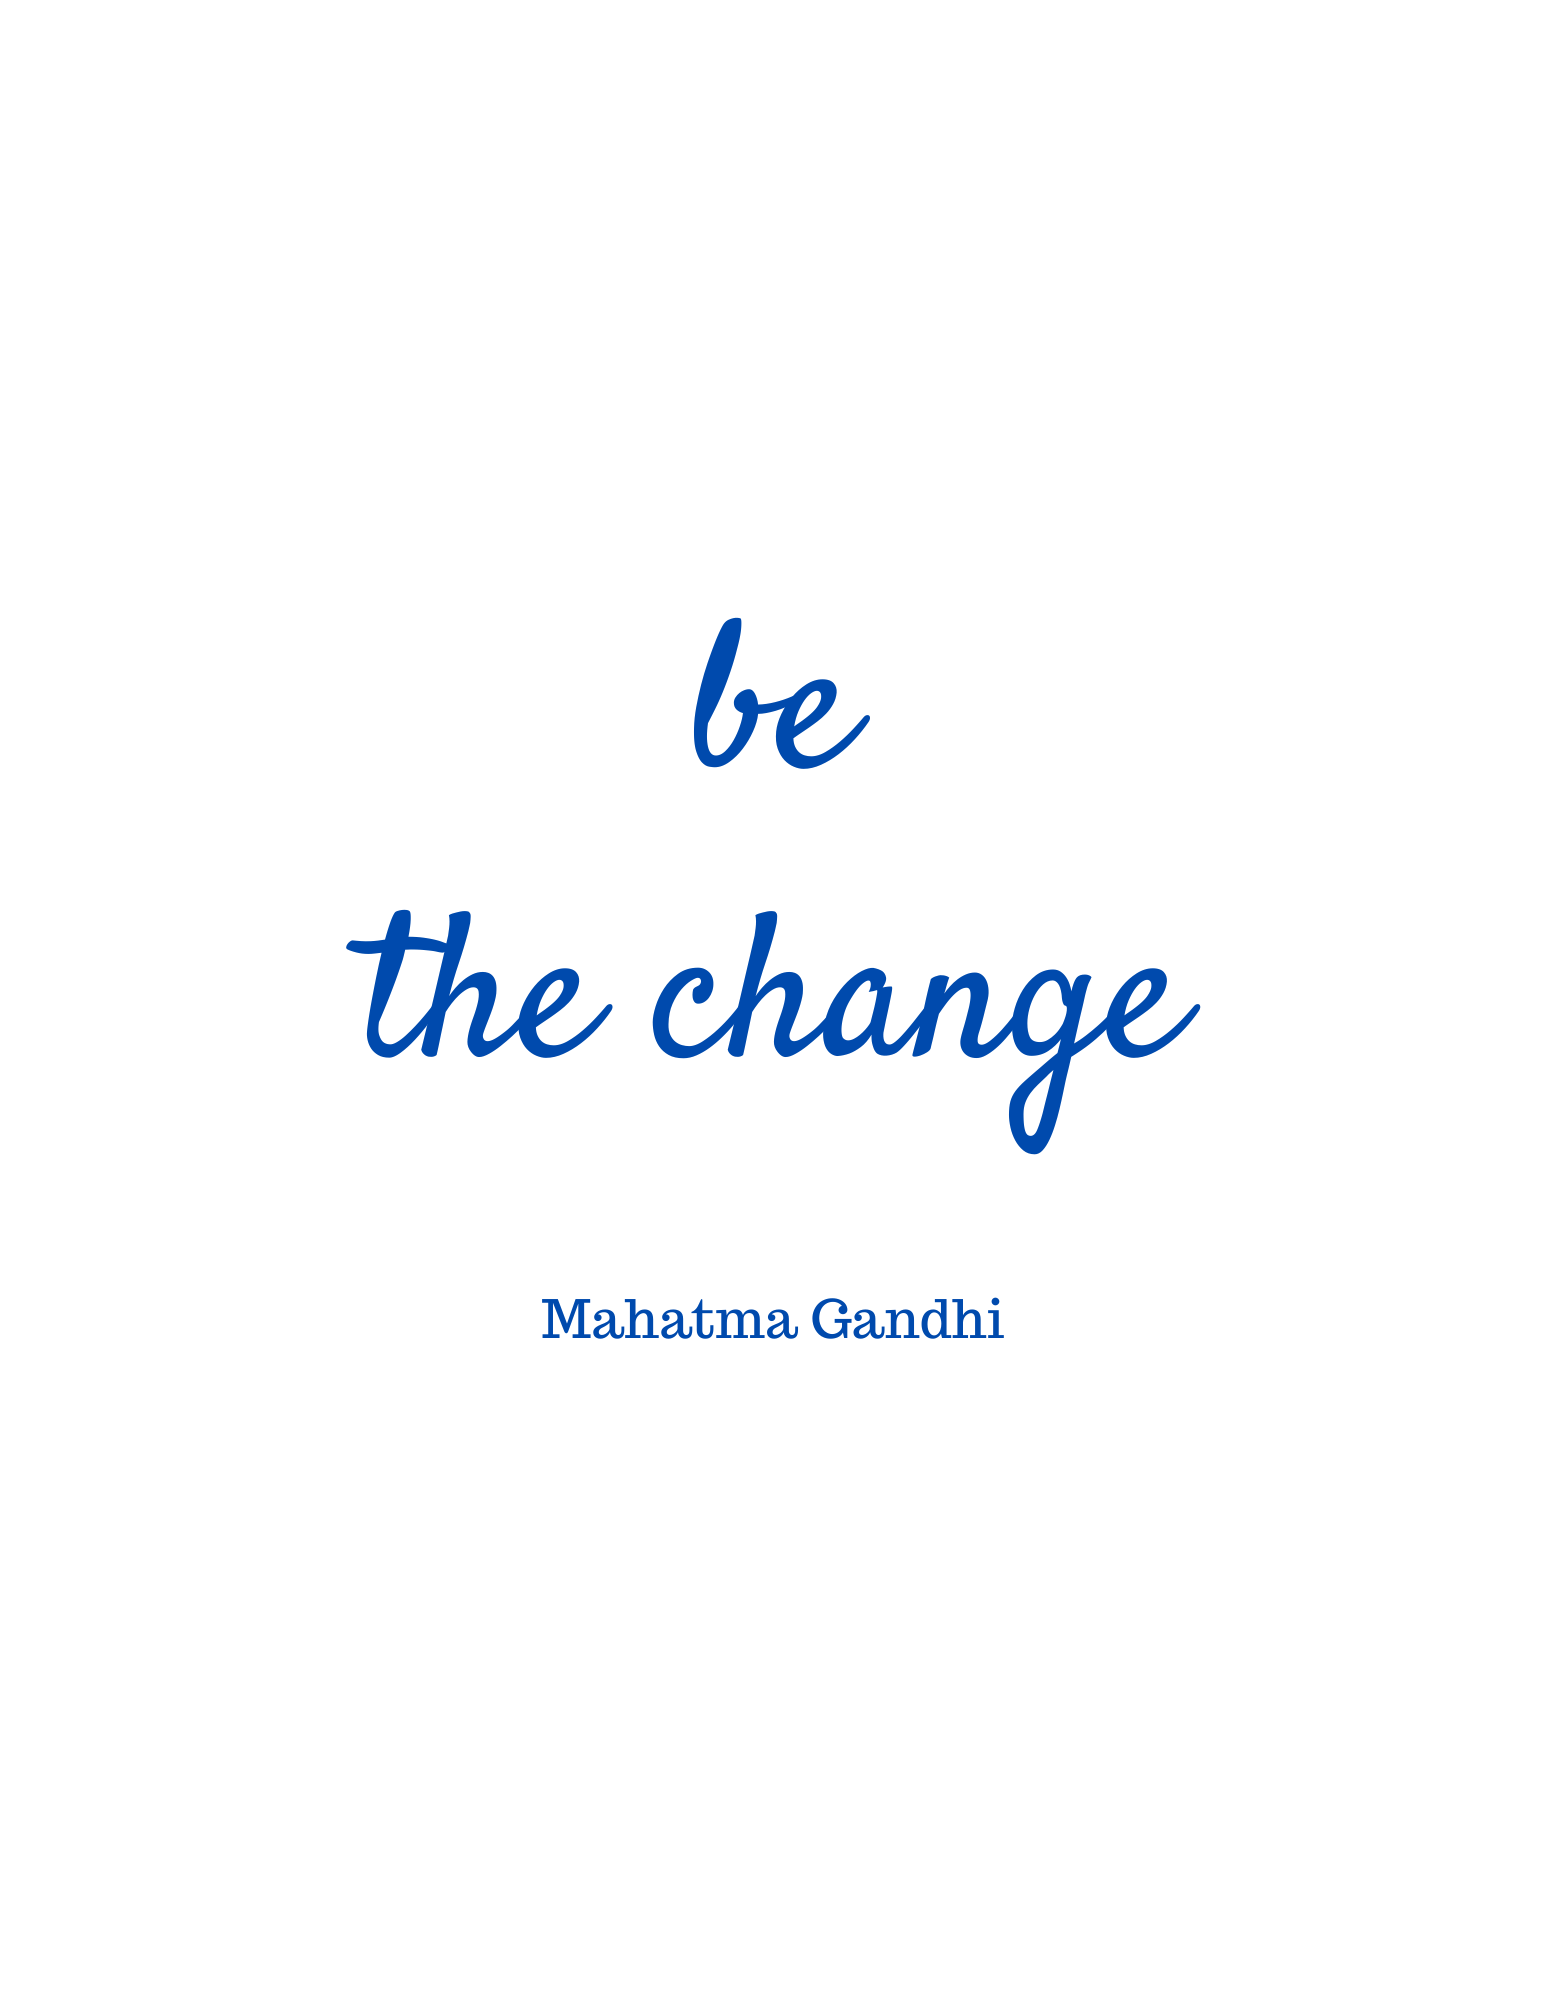 Be the change - Mahatma Gandhi